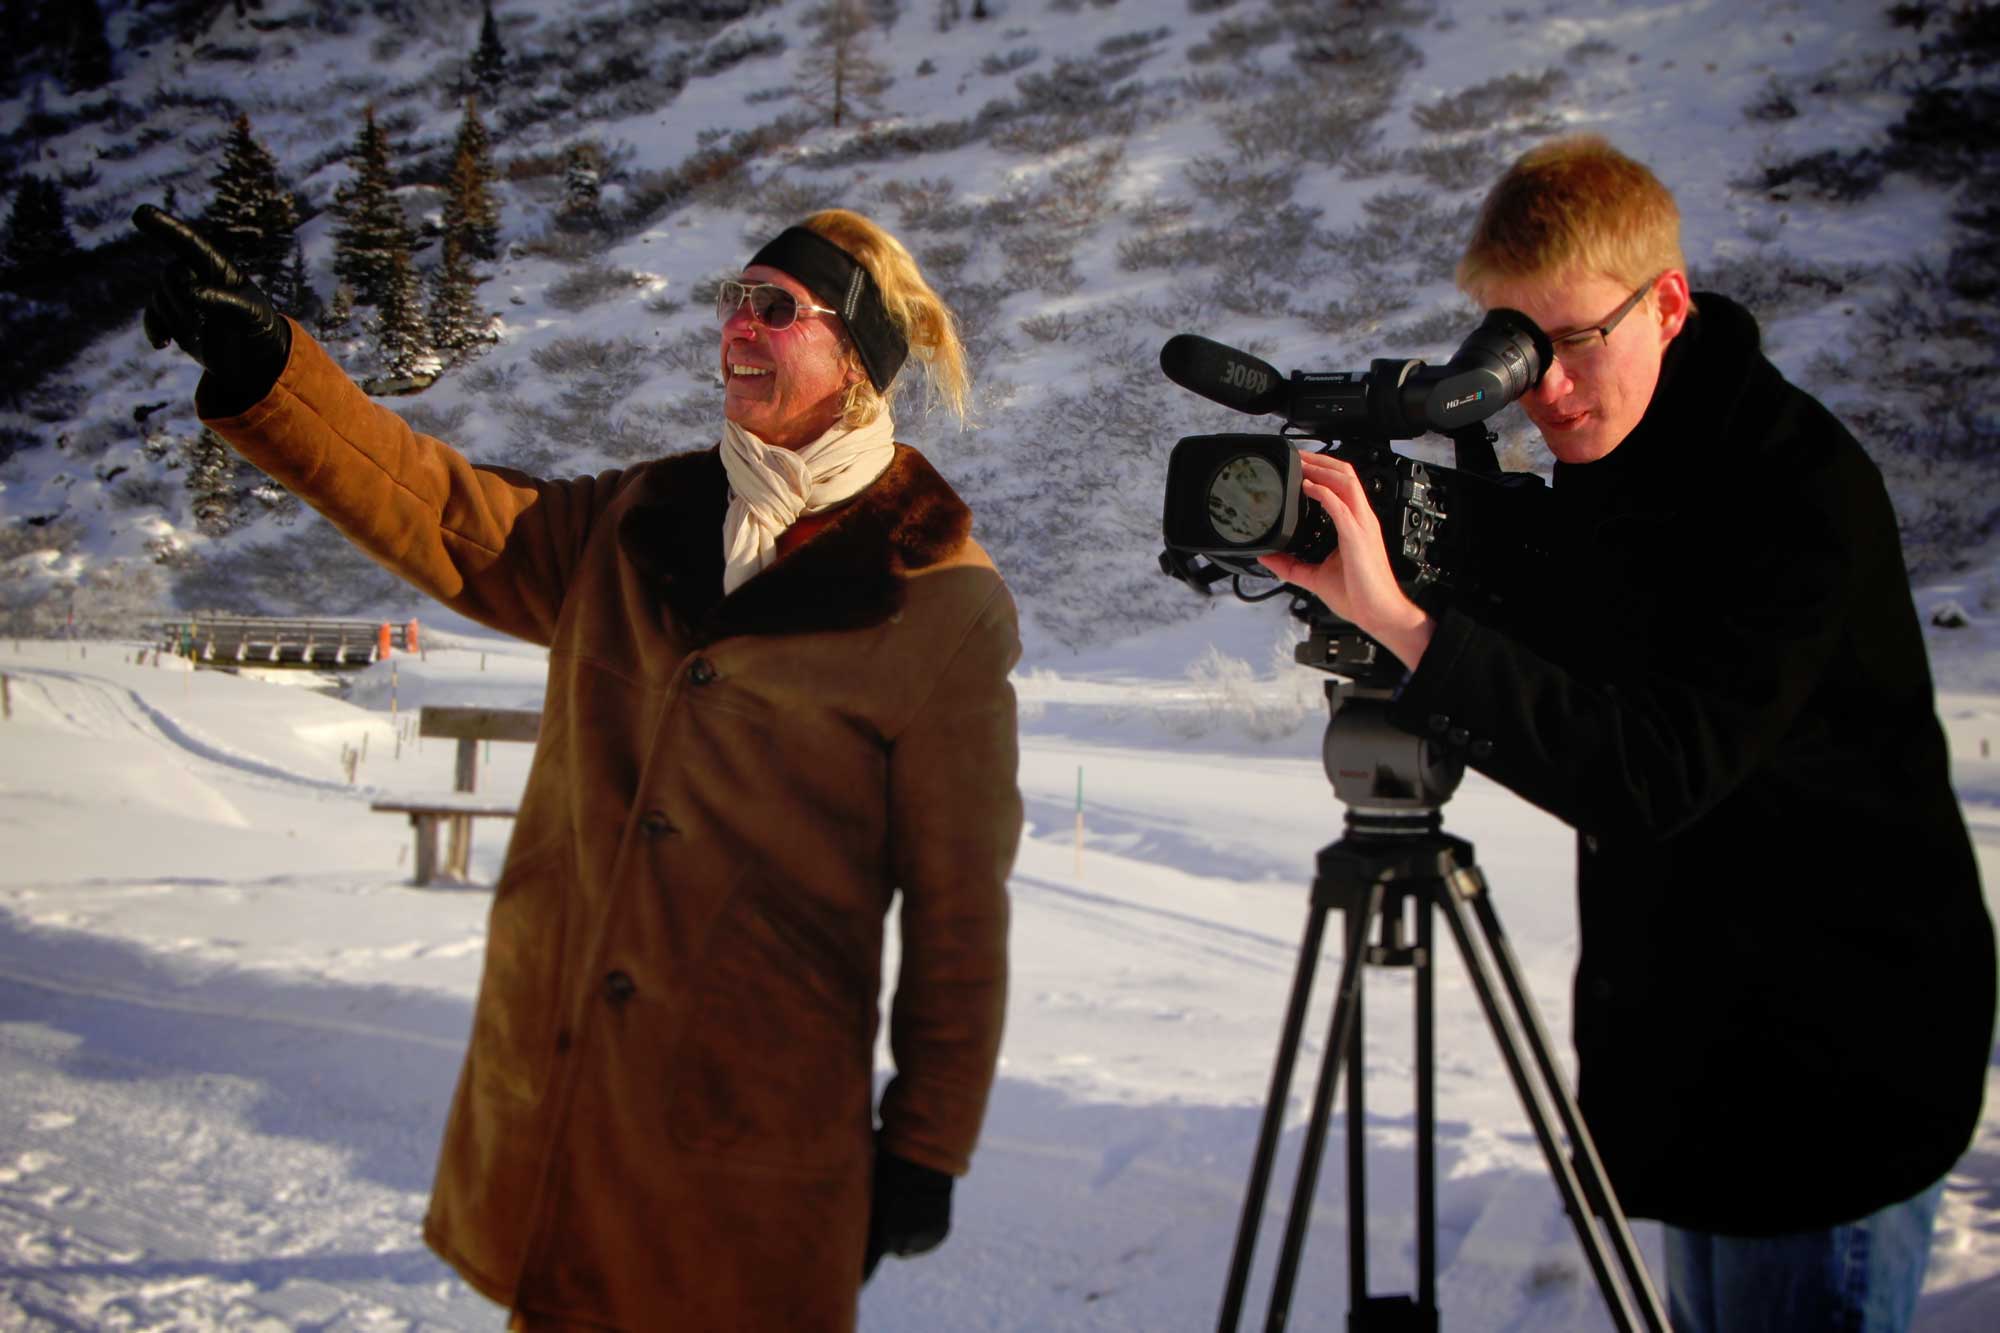 Bremer Imagefilm Produktion in den Alpen